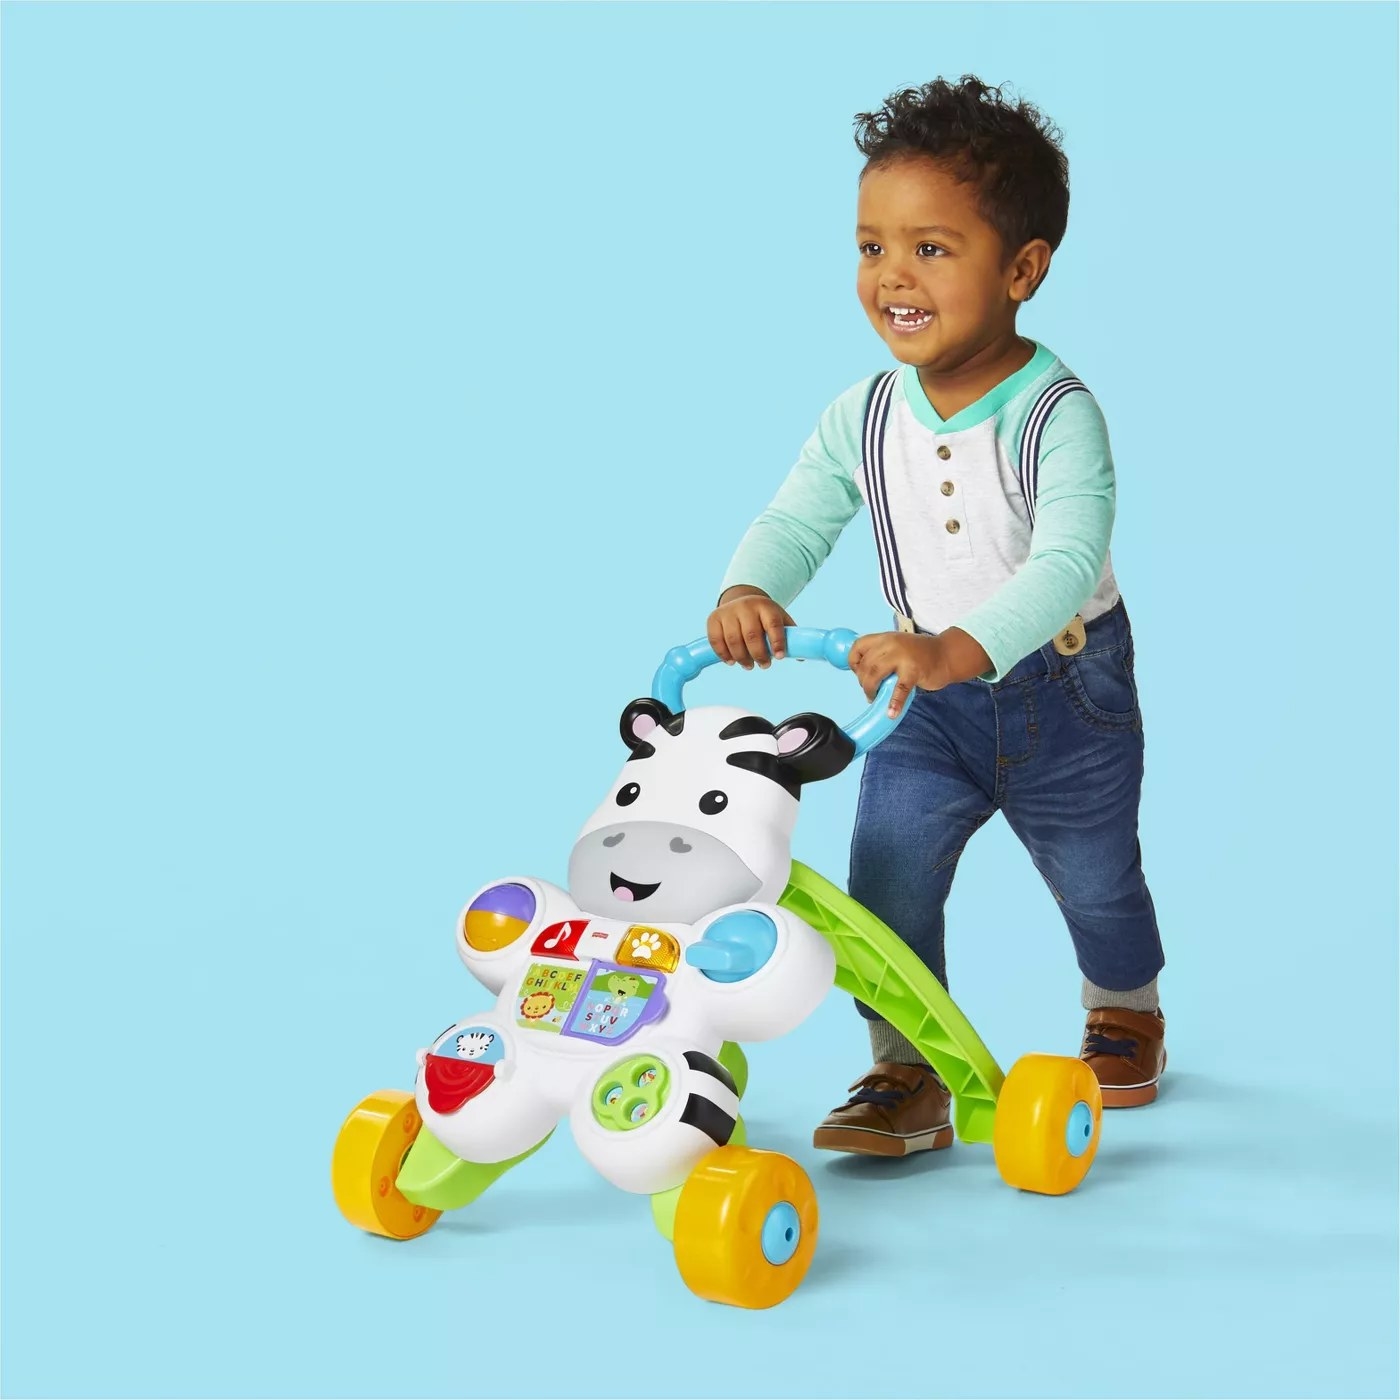 A toddler using the zebra walker